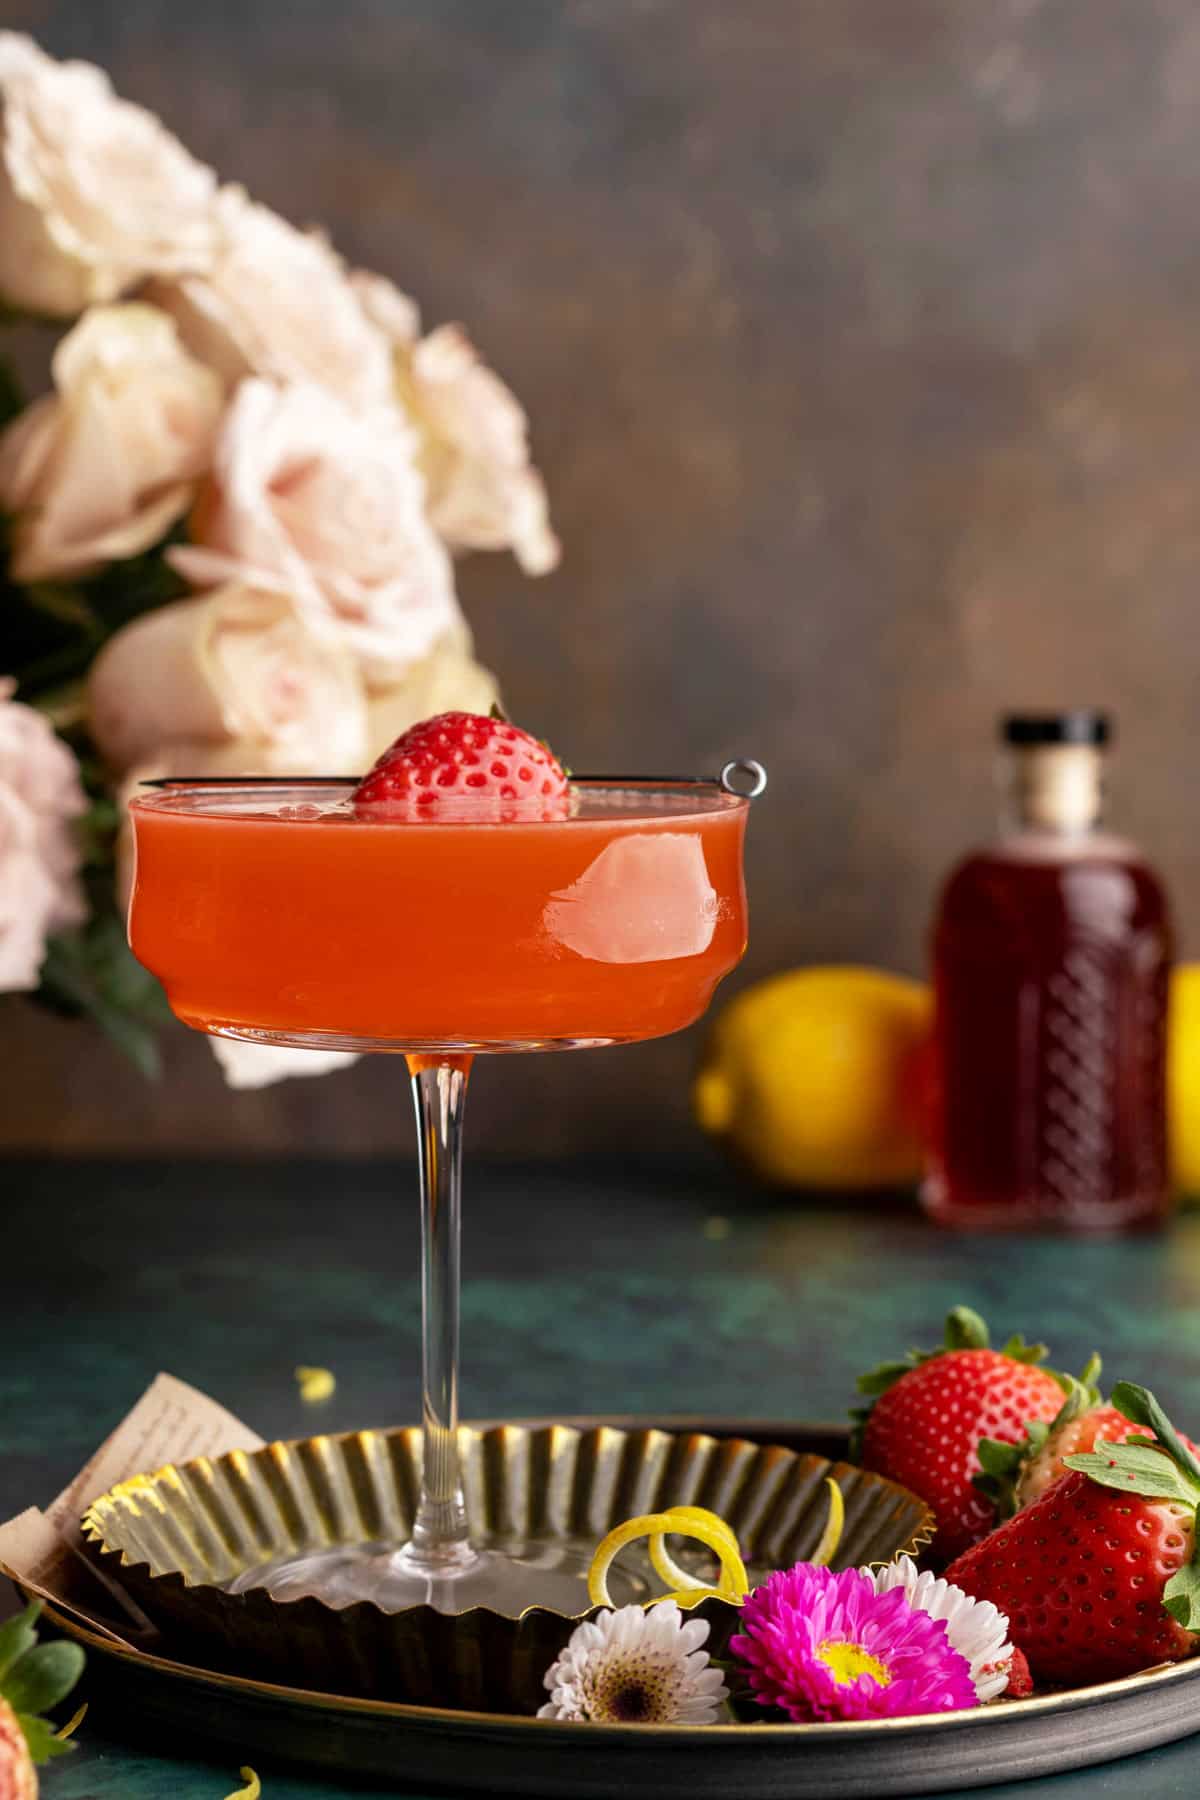 Strawberry martini with garnish.